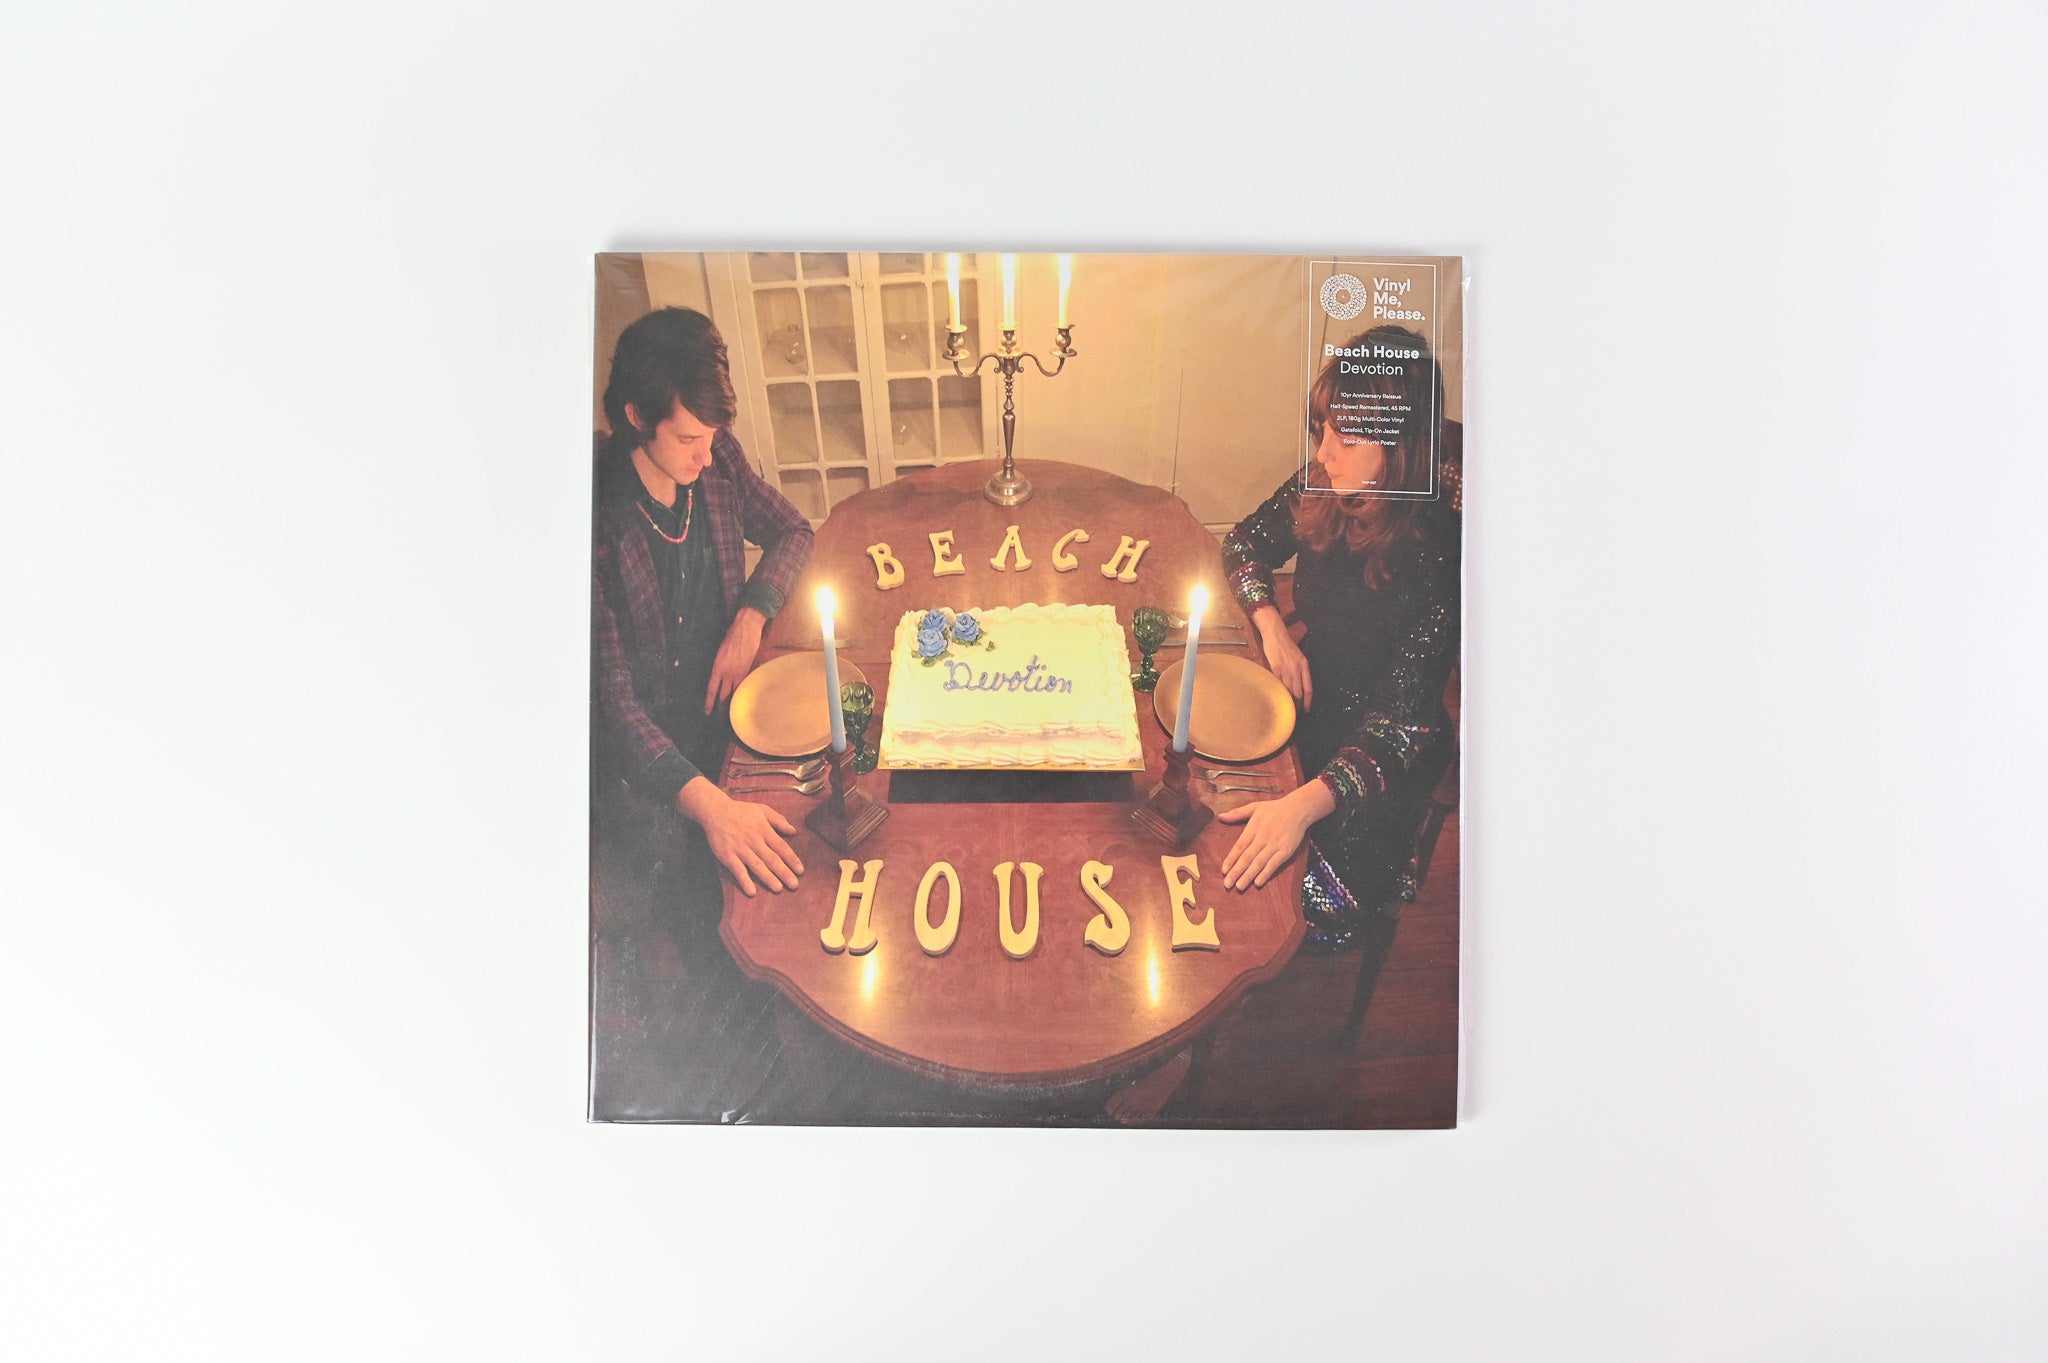 Beach House - Devotion on Carpark Deluxe Clear w/Gold Splatter Reissue